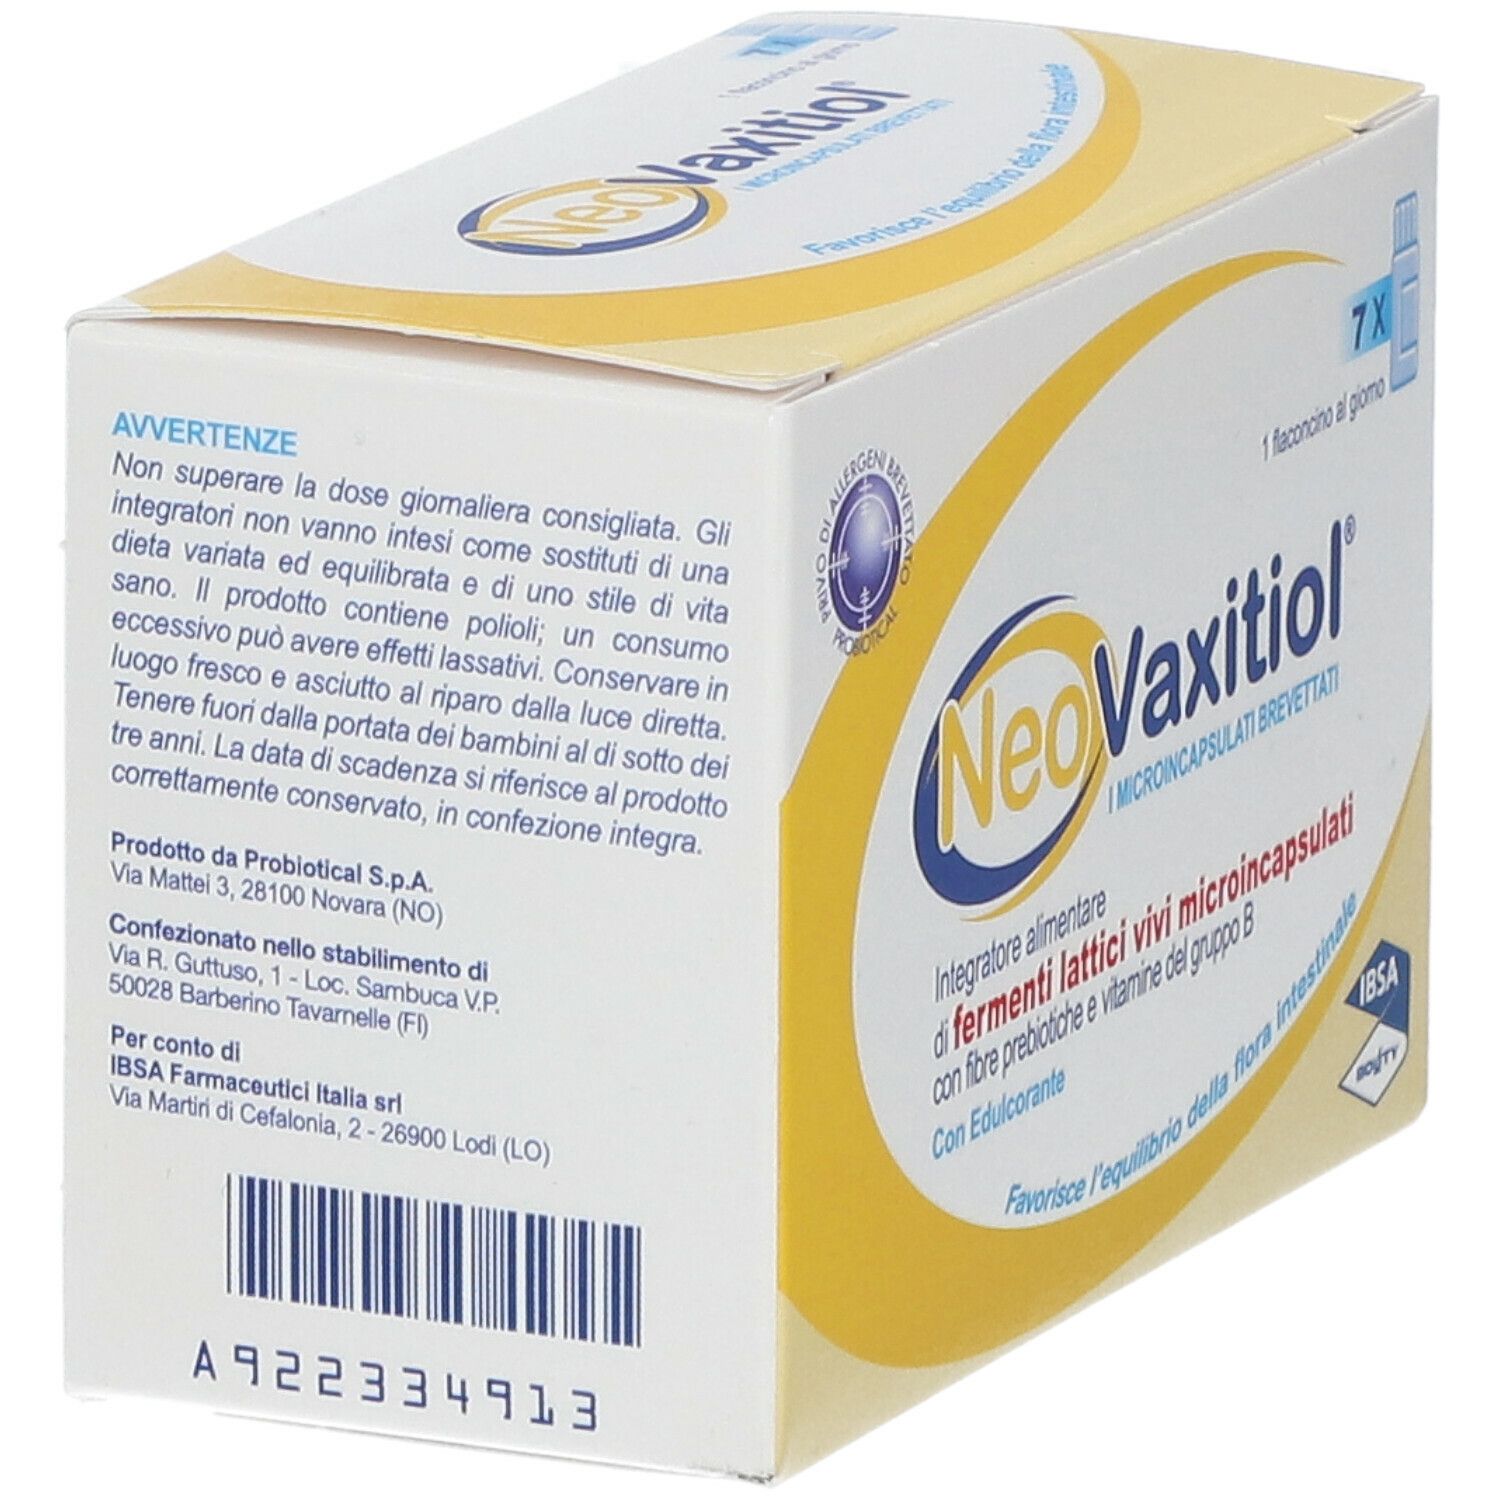 NeoVaxitiol®  Flaconcini